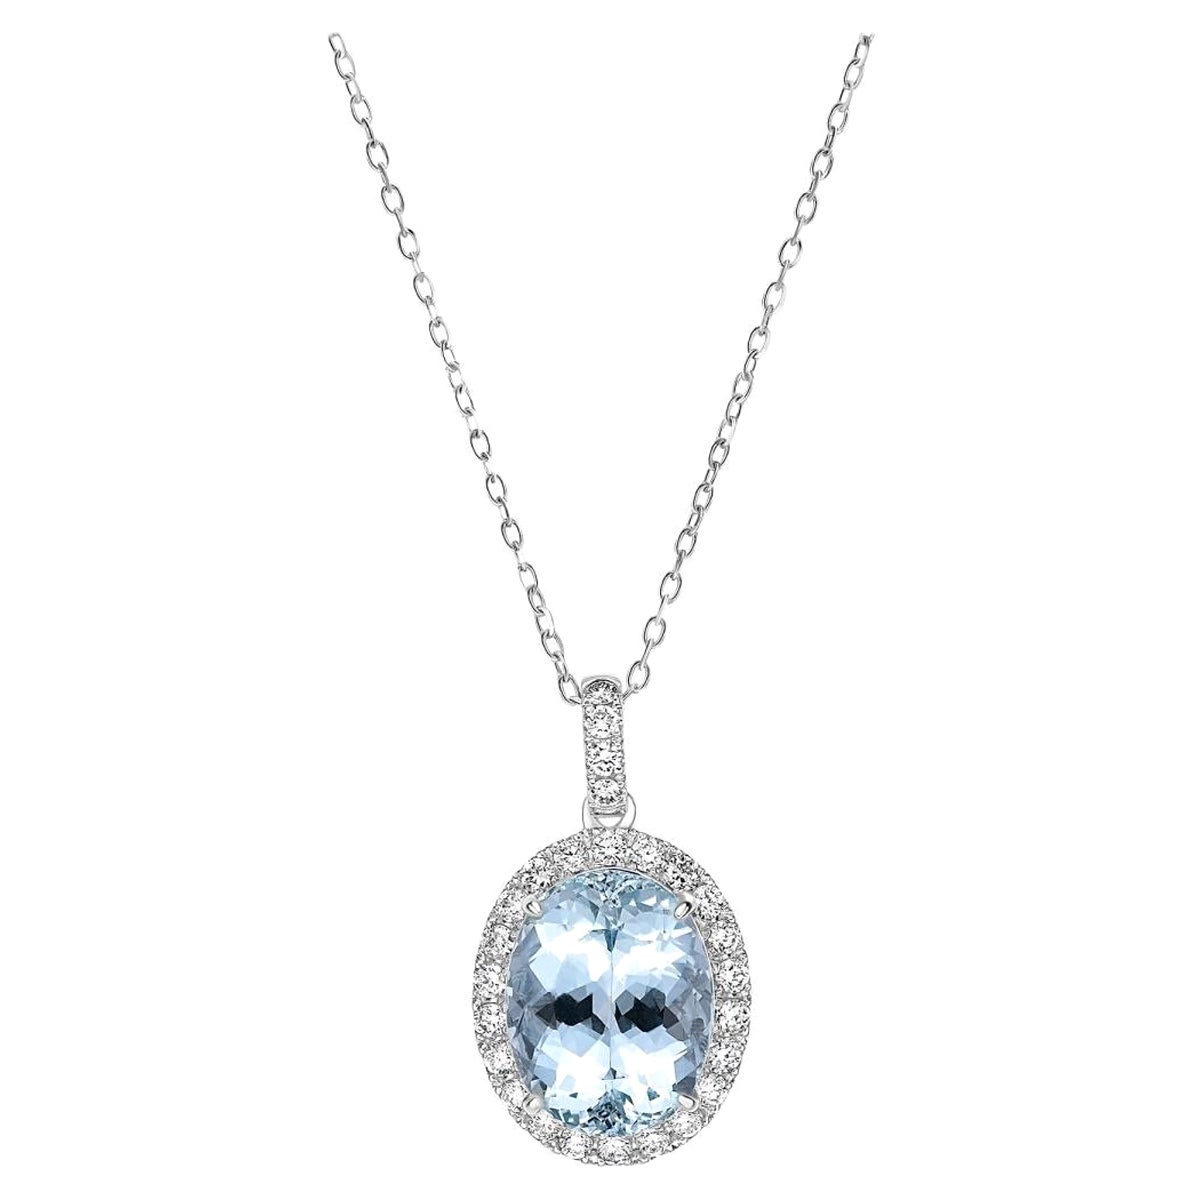 Gilin 18k White Gold Diamond Pendant with Aquamarine For Sale